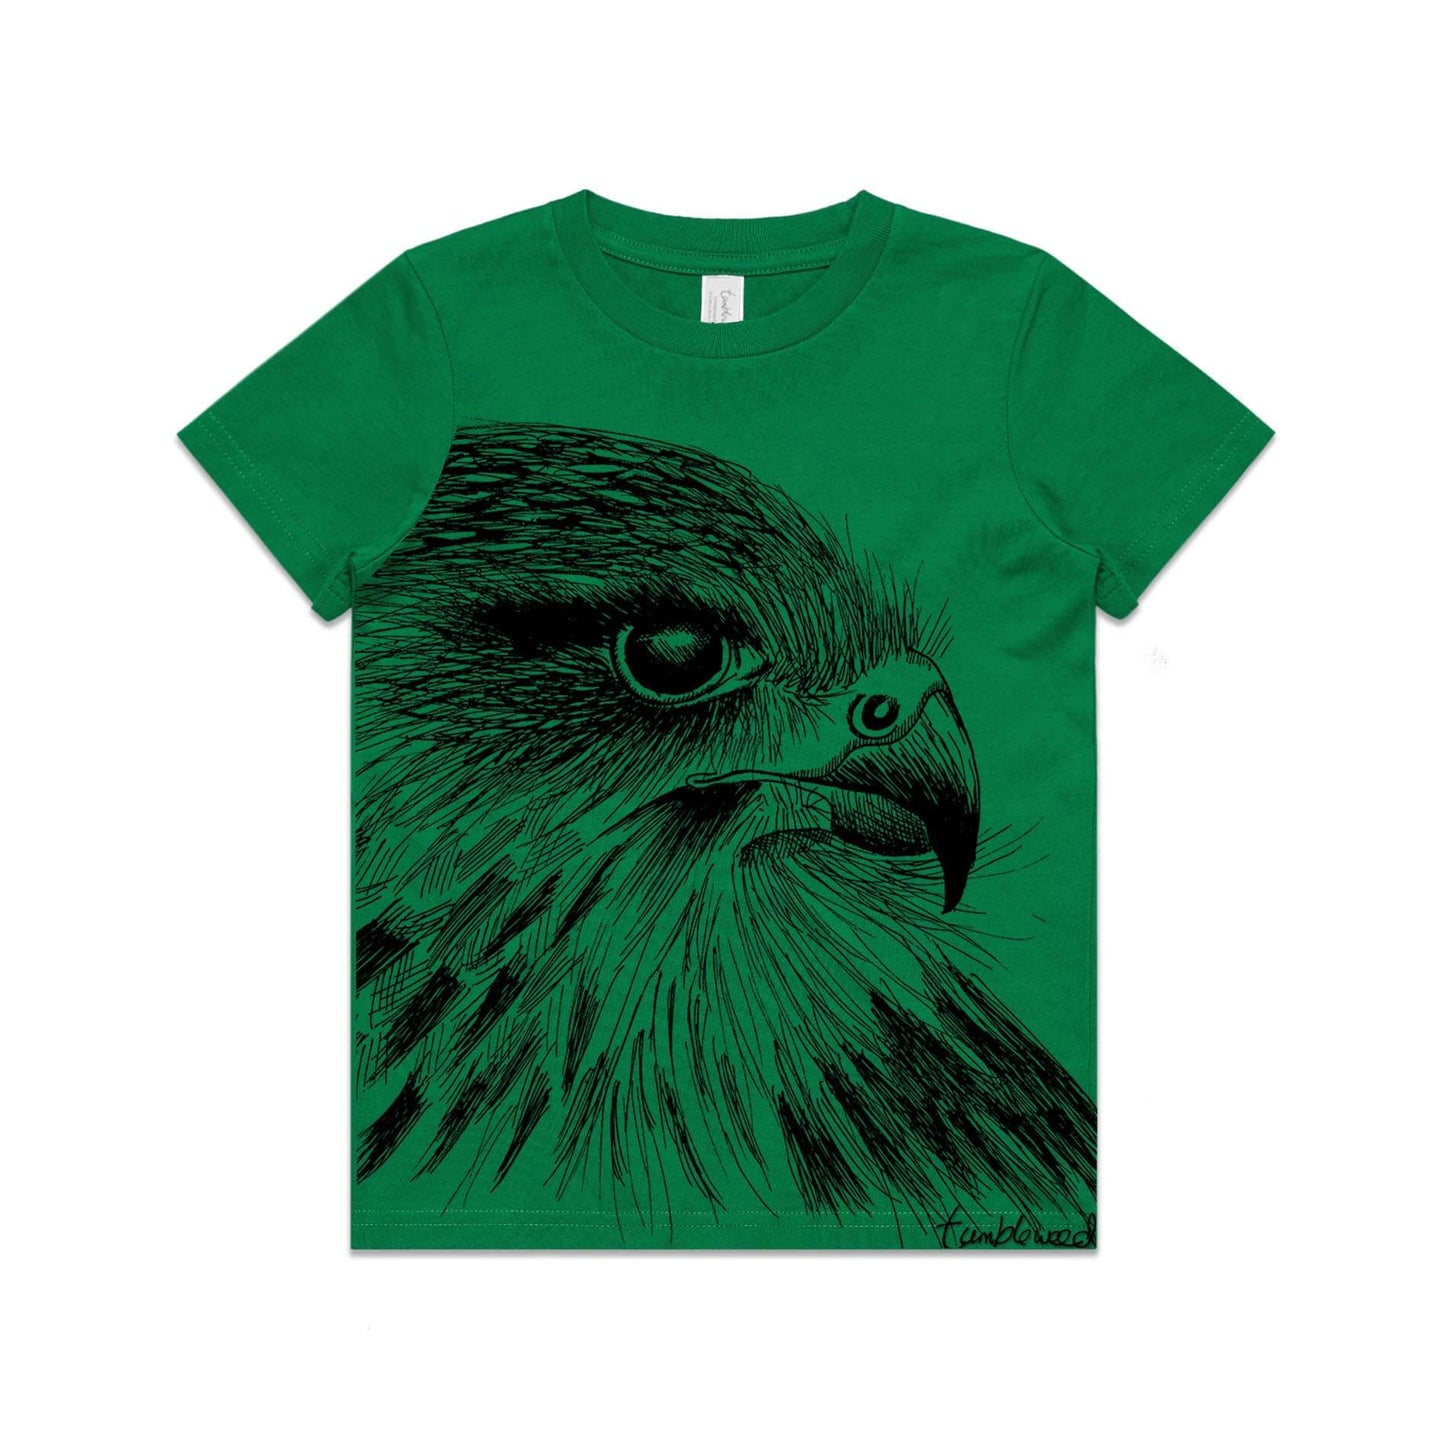 Green, cotton kids' t-shirt with screen printed Kids Karearea/NZ Falcon design.